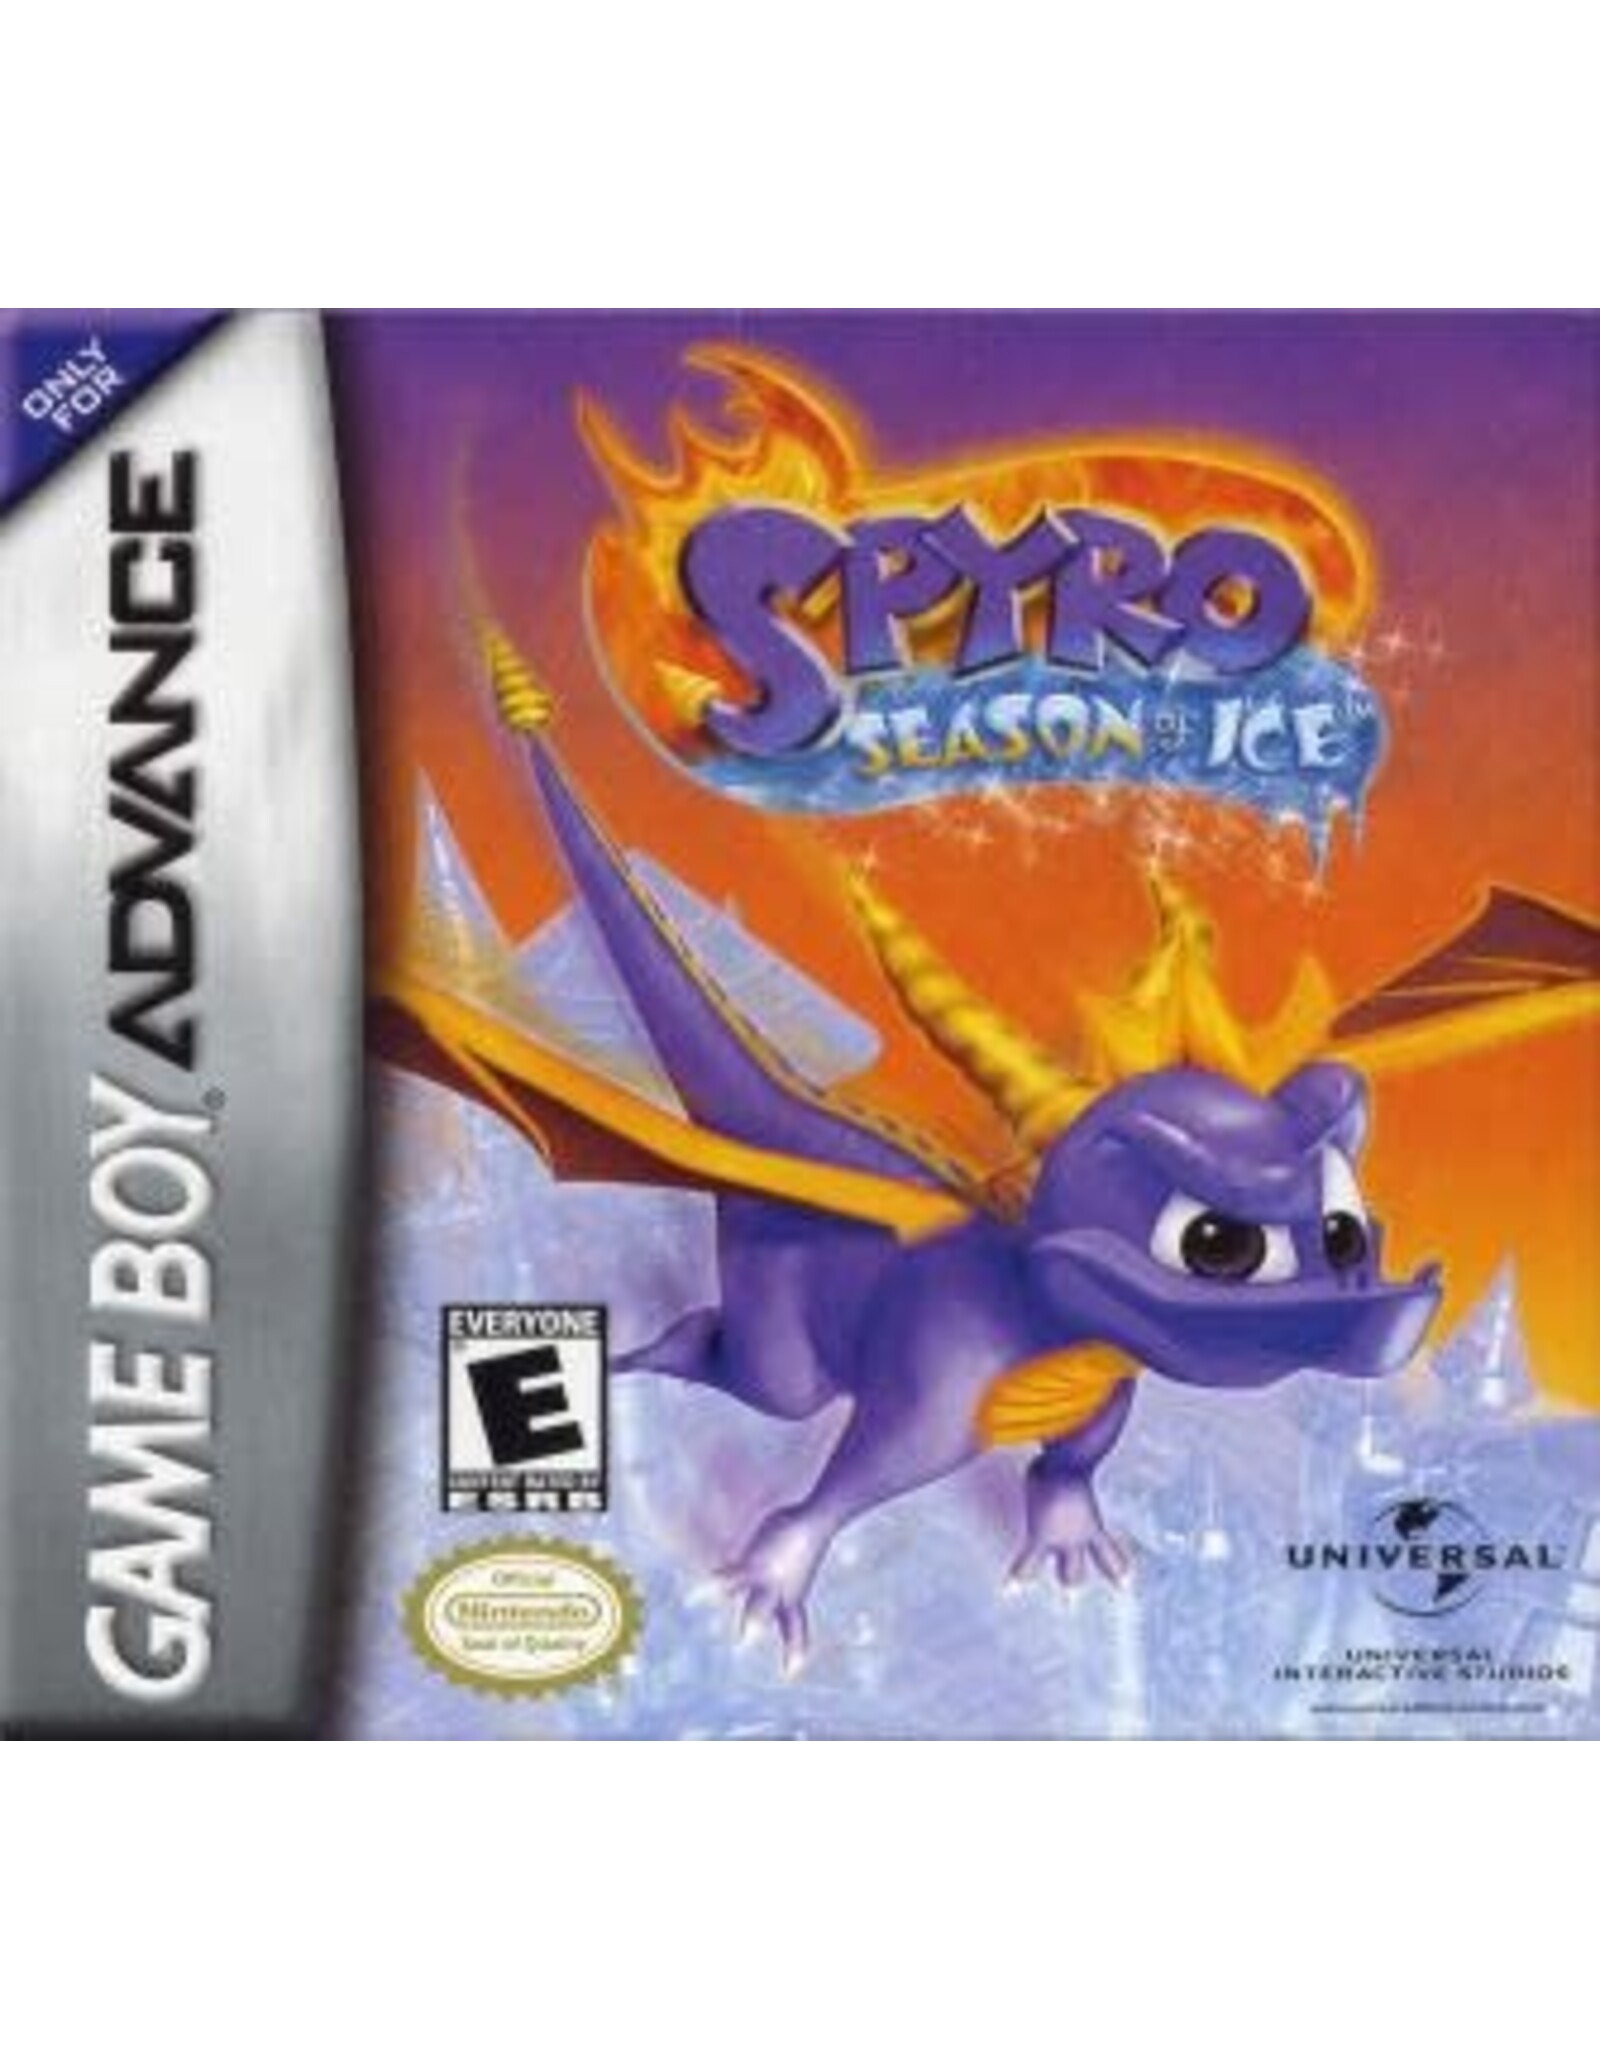 Game Boy Advance Spyro Season of Ice (Boxed, No Manual, Damaged 